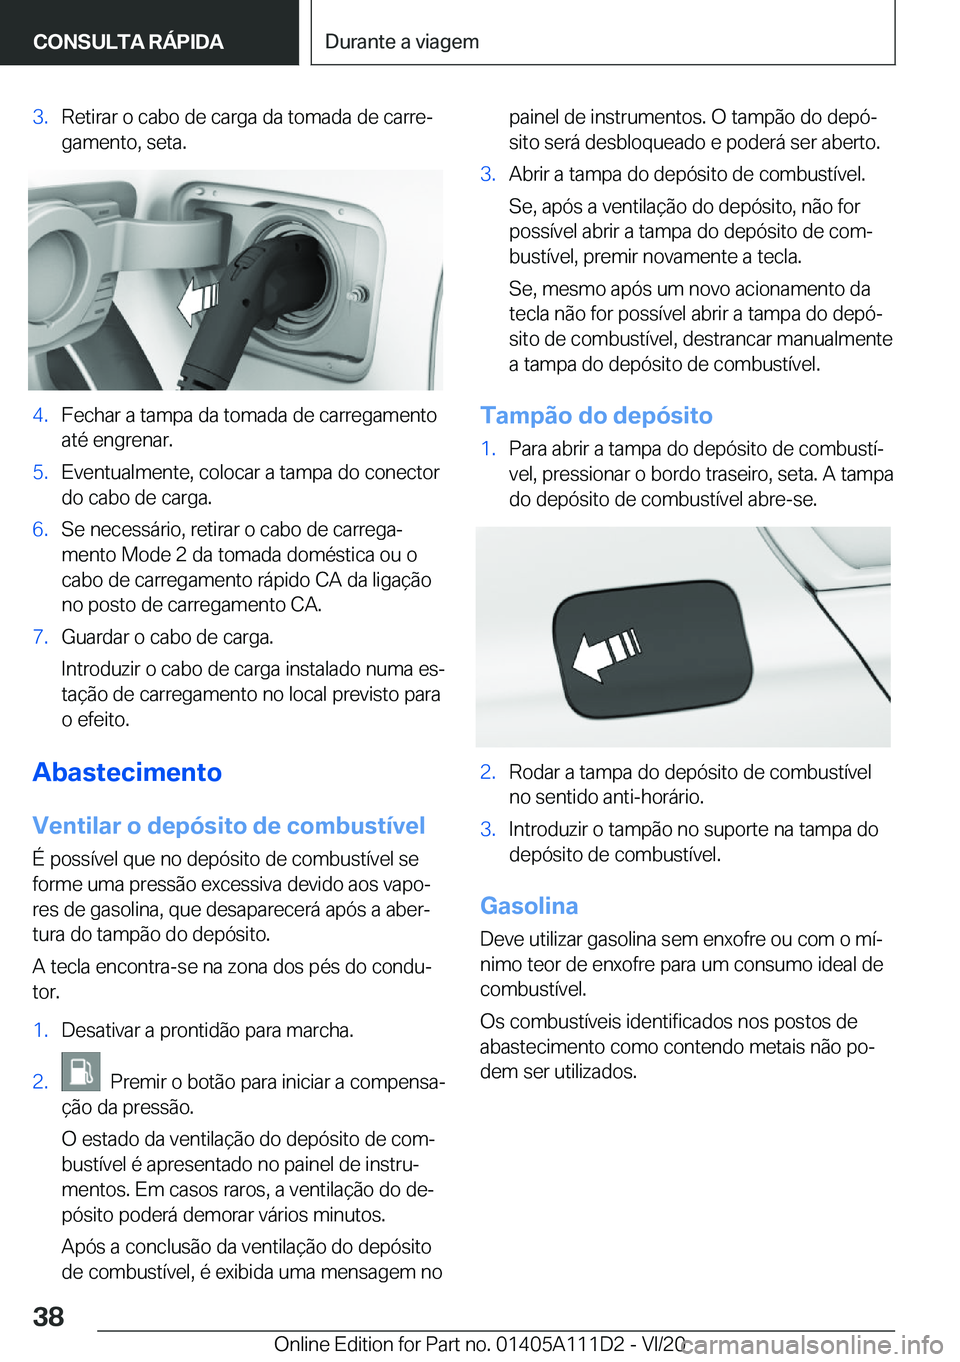 BMW 3 SERIES SEDAN PLUG-IN HYBRID 2021  Manual do condutor (in Portuguese) �3�.�R�e�t�i�r�a�r��o��c�a�b�o��d�e��c�a�r�g�a��d�a��t�o�m�a�d�a��d�e��c�a�r�r�eª
�g�a�m�e�n�t�o�,��s�e�t�a�.�4�.�F�e�c�h�a�r��a��t�a�m�p�a��d�a��t�o�m�a�d�a��d�e��c�a�r�r�e�g�a�m�e�n